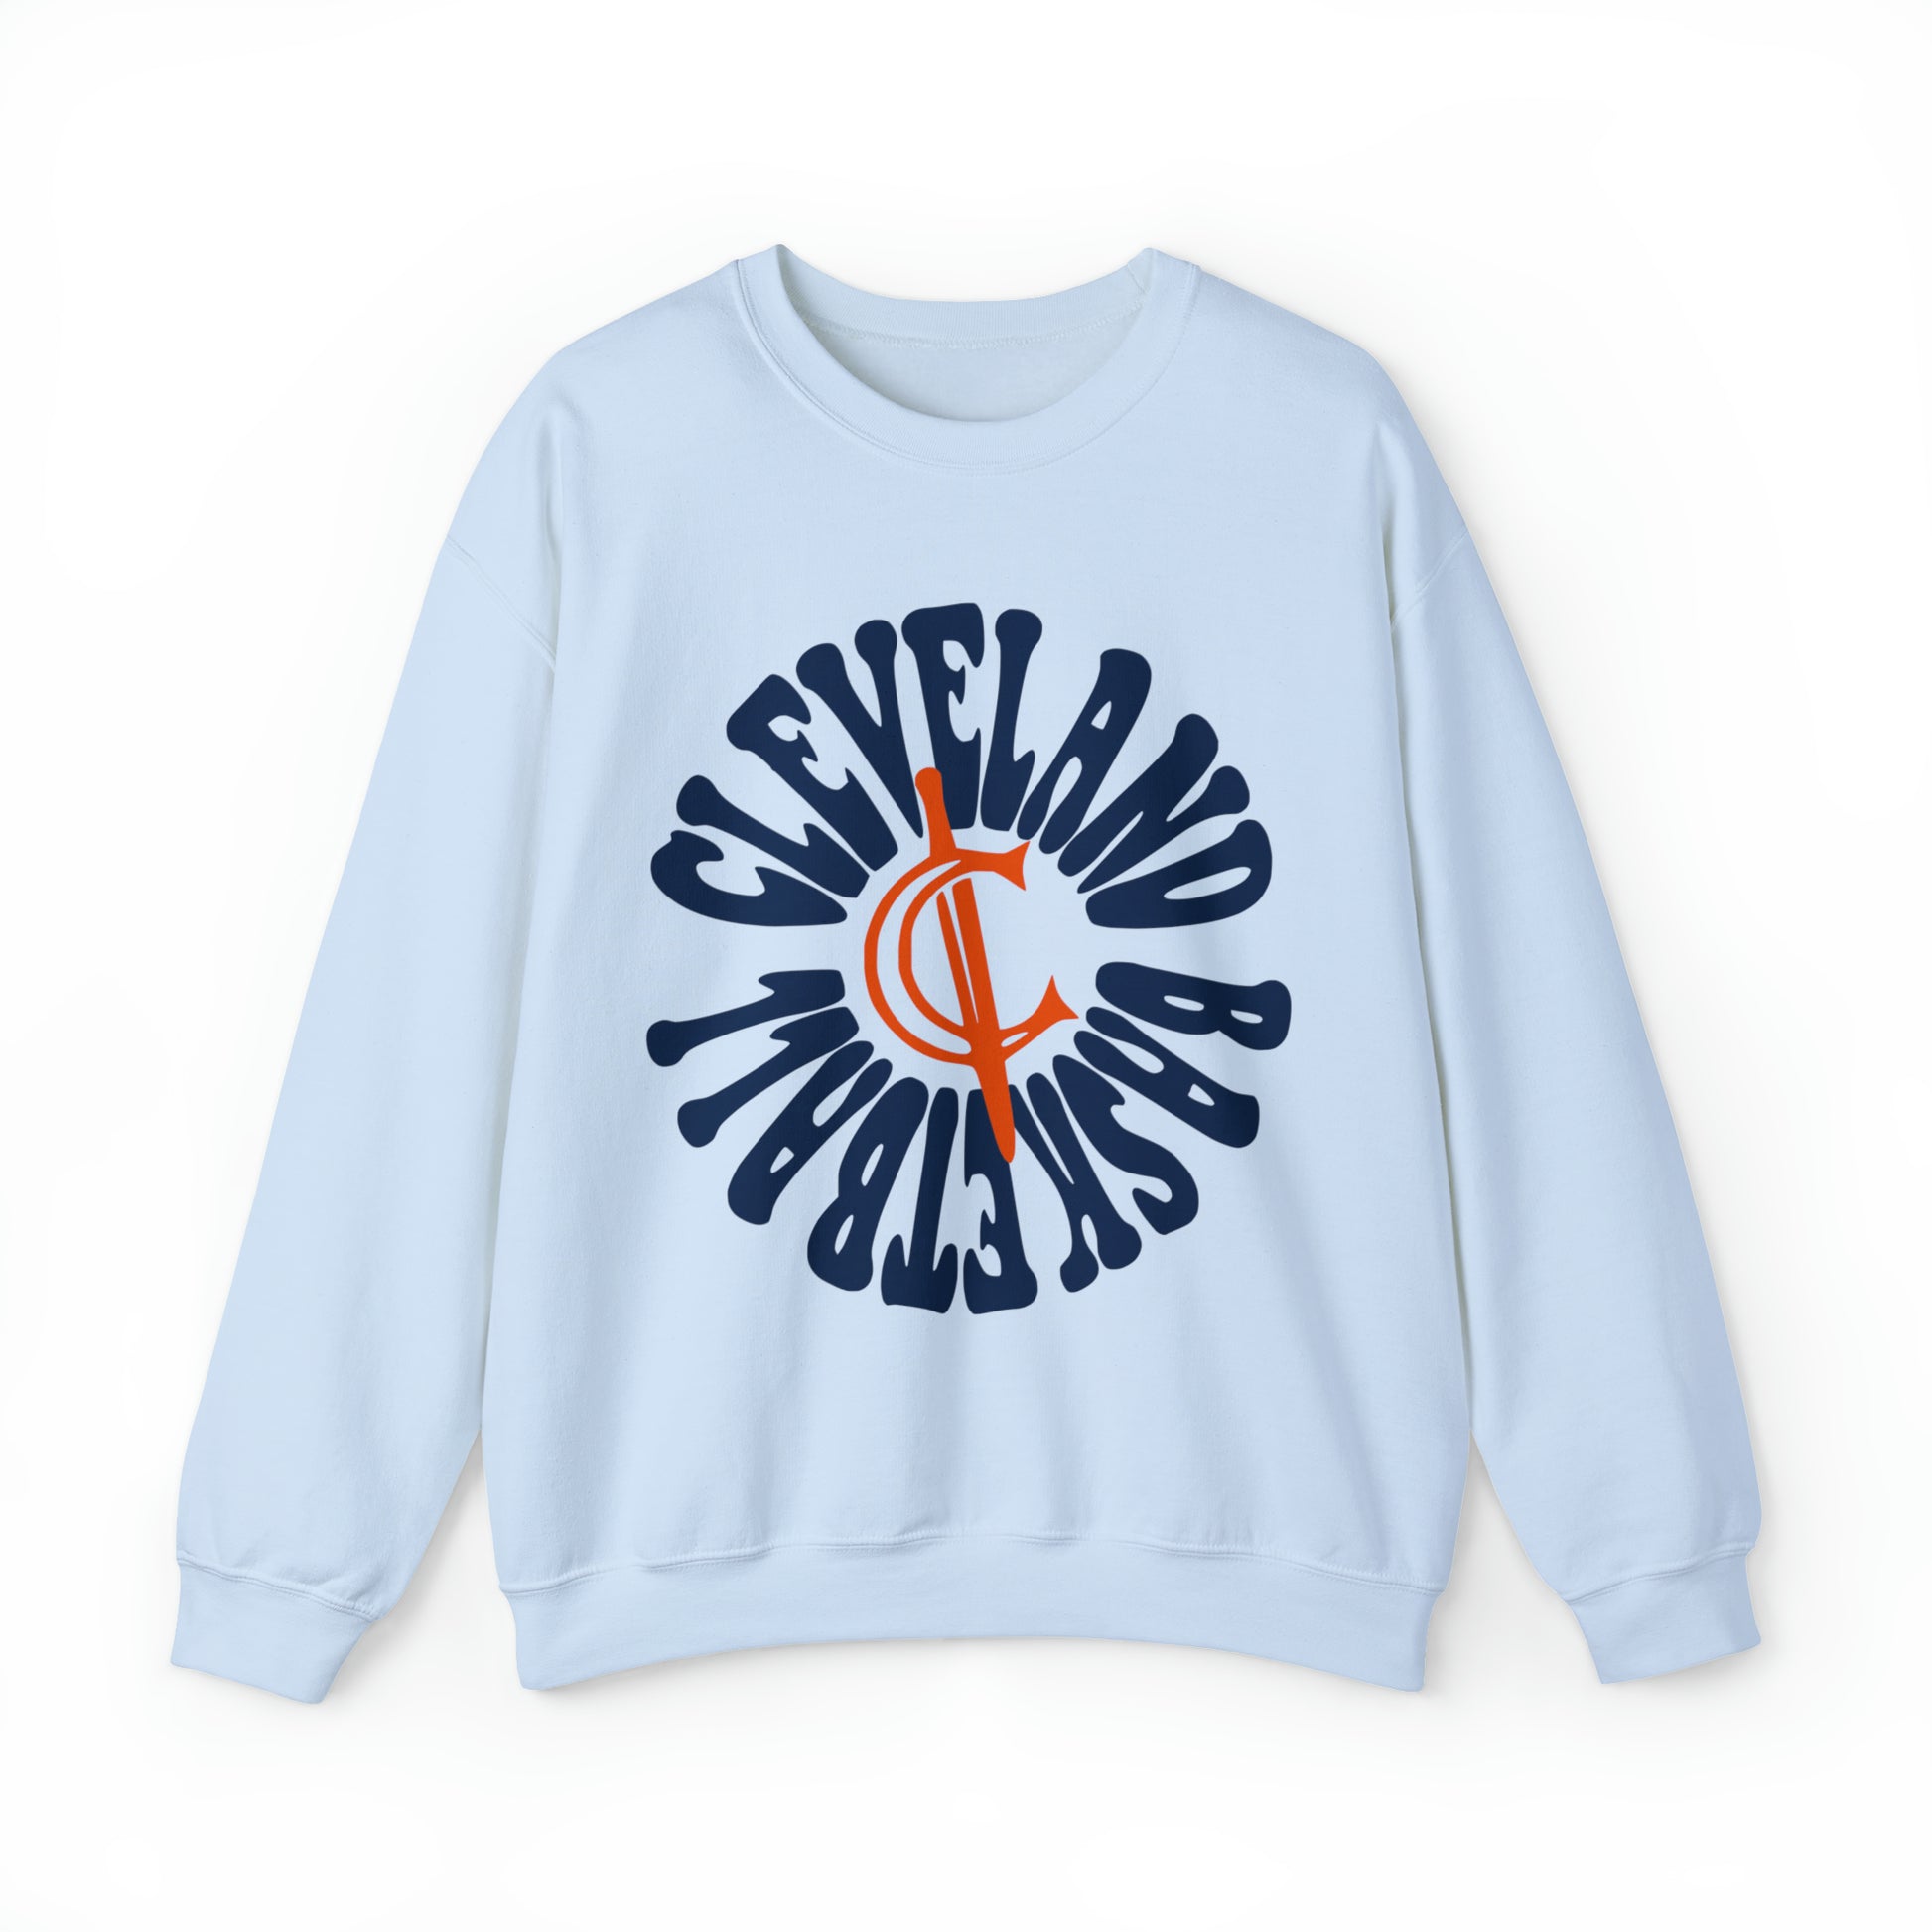 Throwback Cleveland Cavaliers Sweatshirt - Blue and Orange Vintage Style Basketball Crewneck